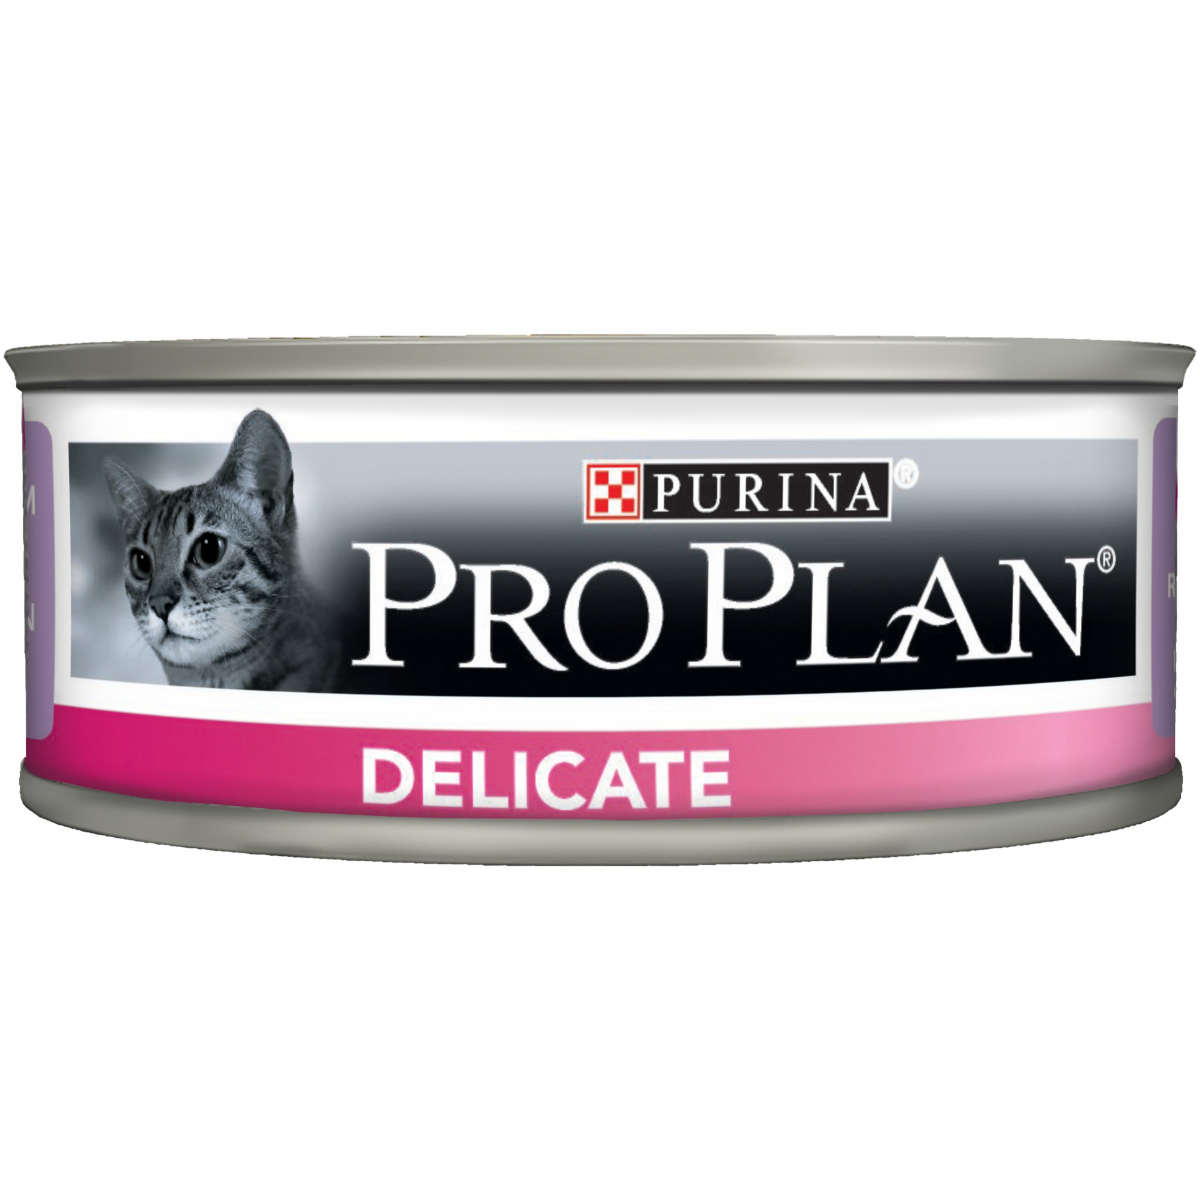 Purina pro plan индейка. Корм для кошек Purina PROPLAN delicat. Пурина Проплан паштет для кошек. Пурина Проплан Деликат для котят. Проплан Деликат паштет для кошек.